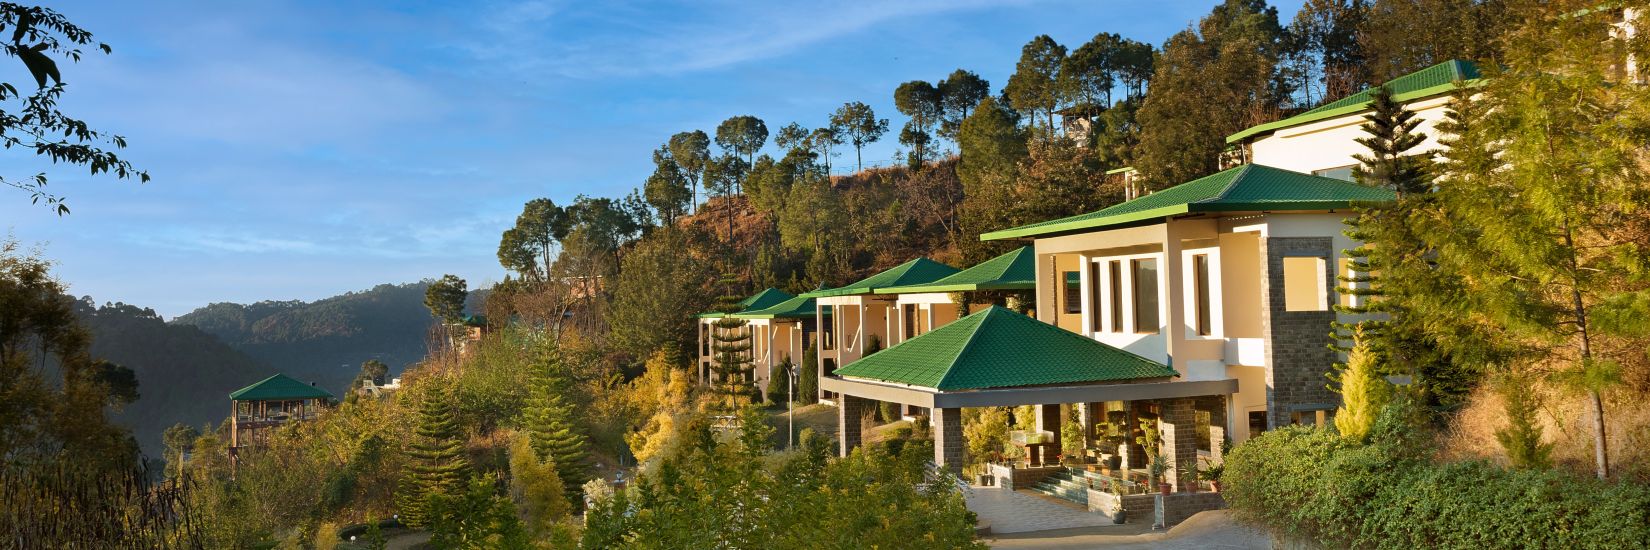 luxury resort in solan - Suryavilas Luxury Resort and Spa